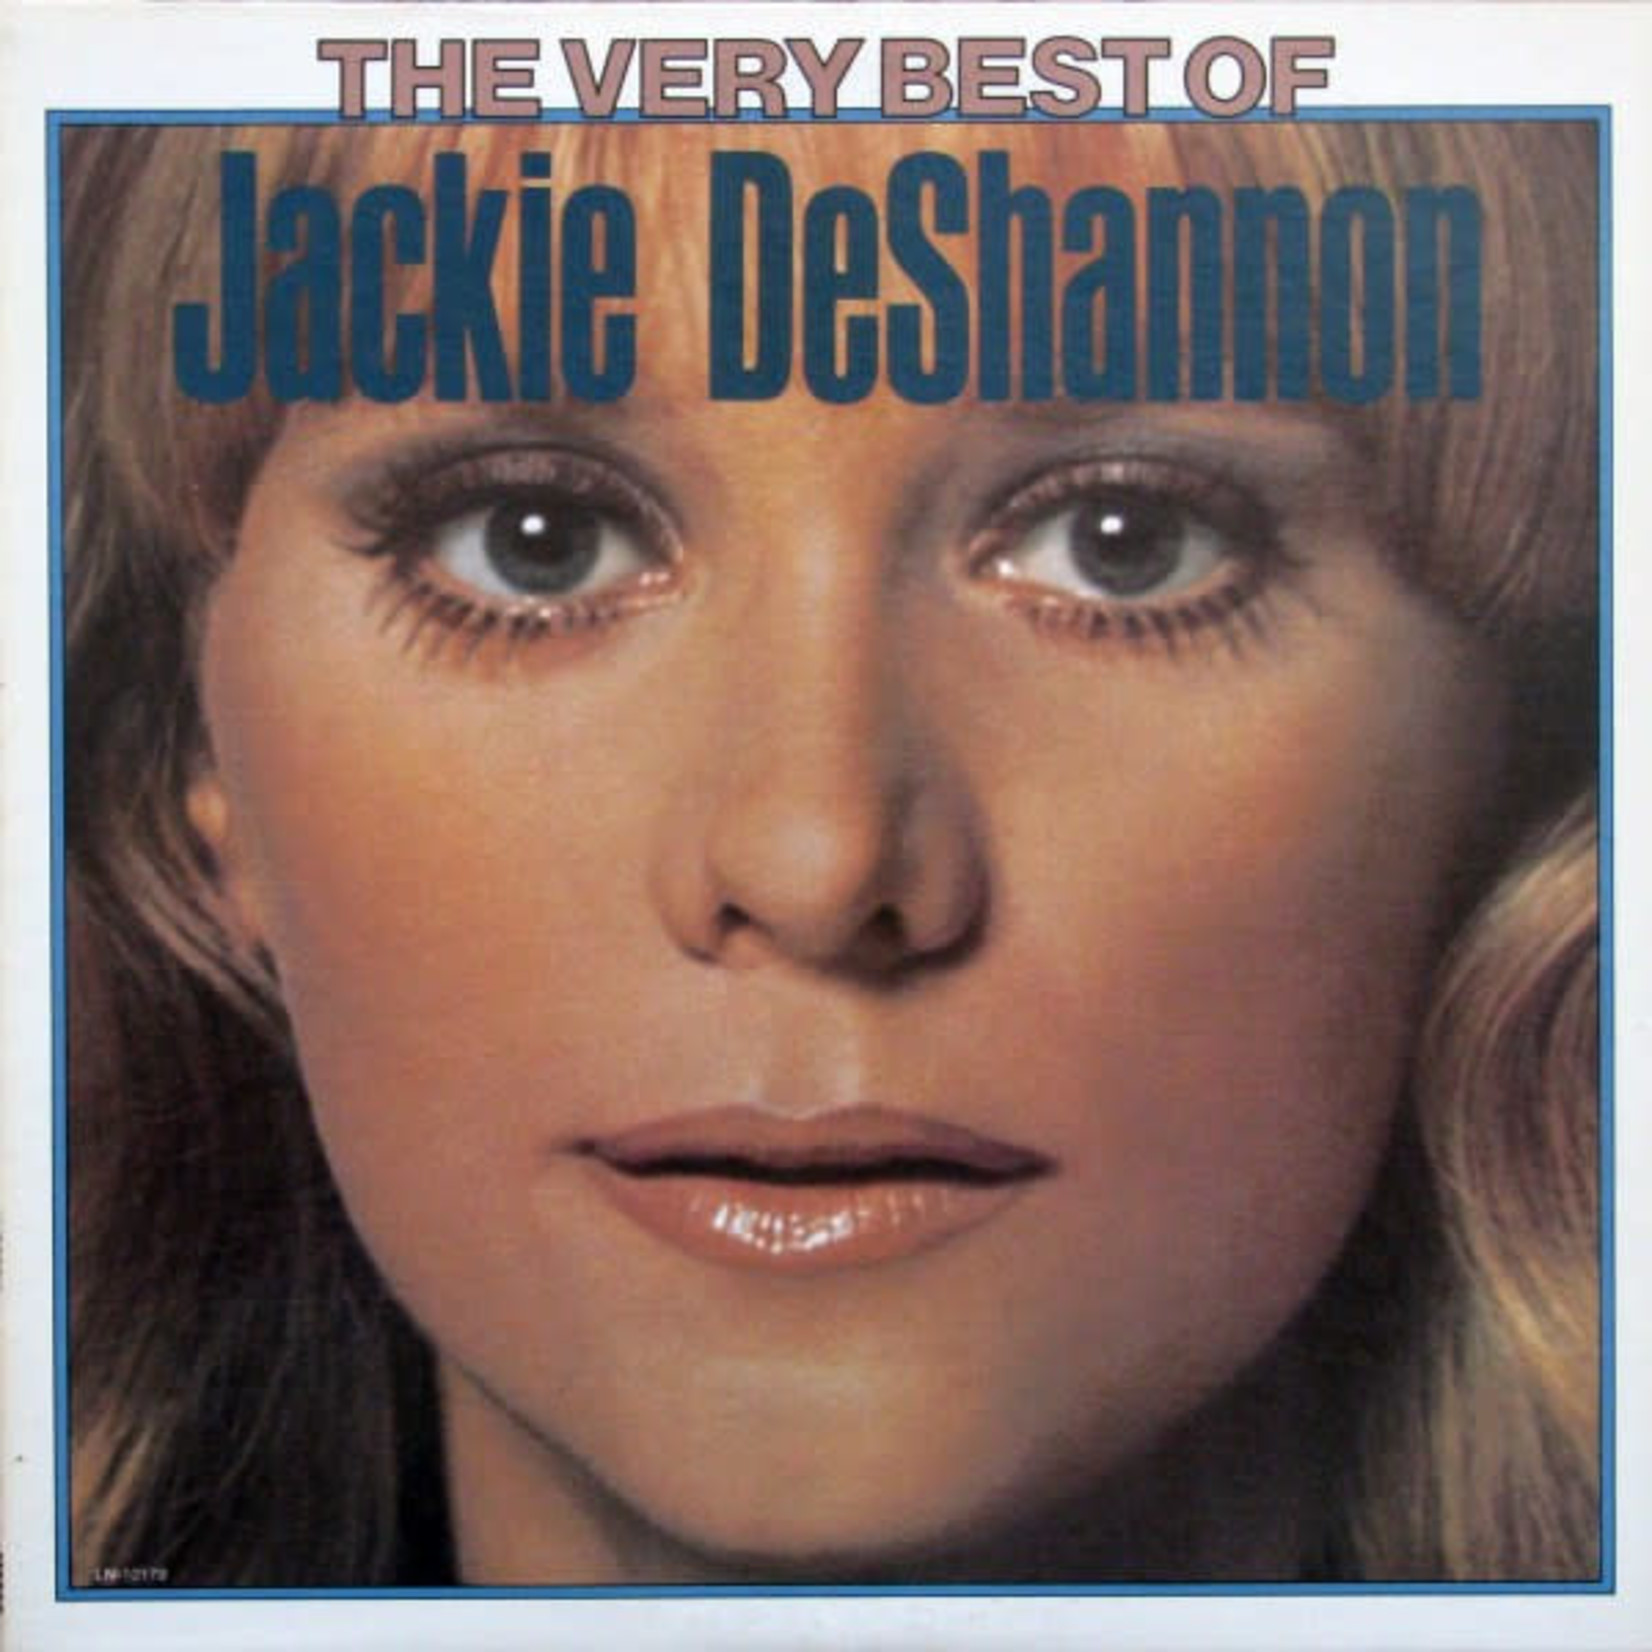 [Vintage] Jackie DeShannon - The Very Best of...  (10 tracks)